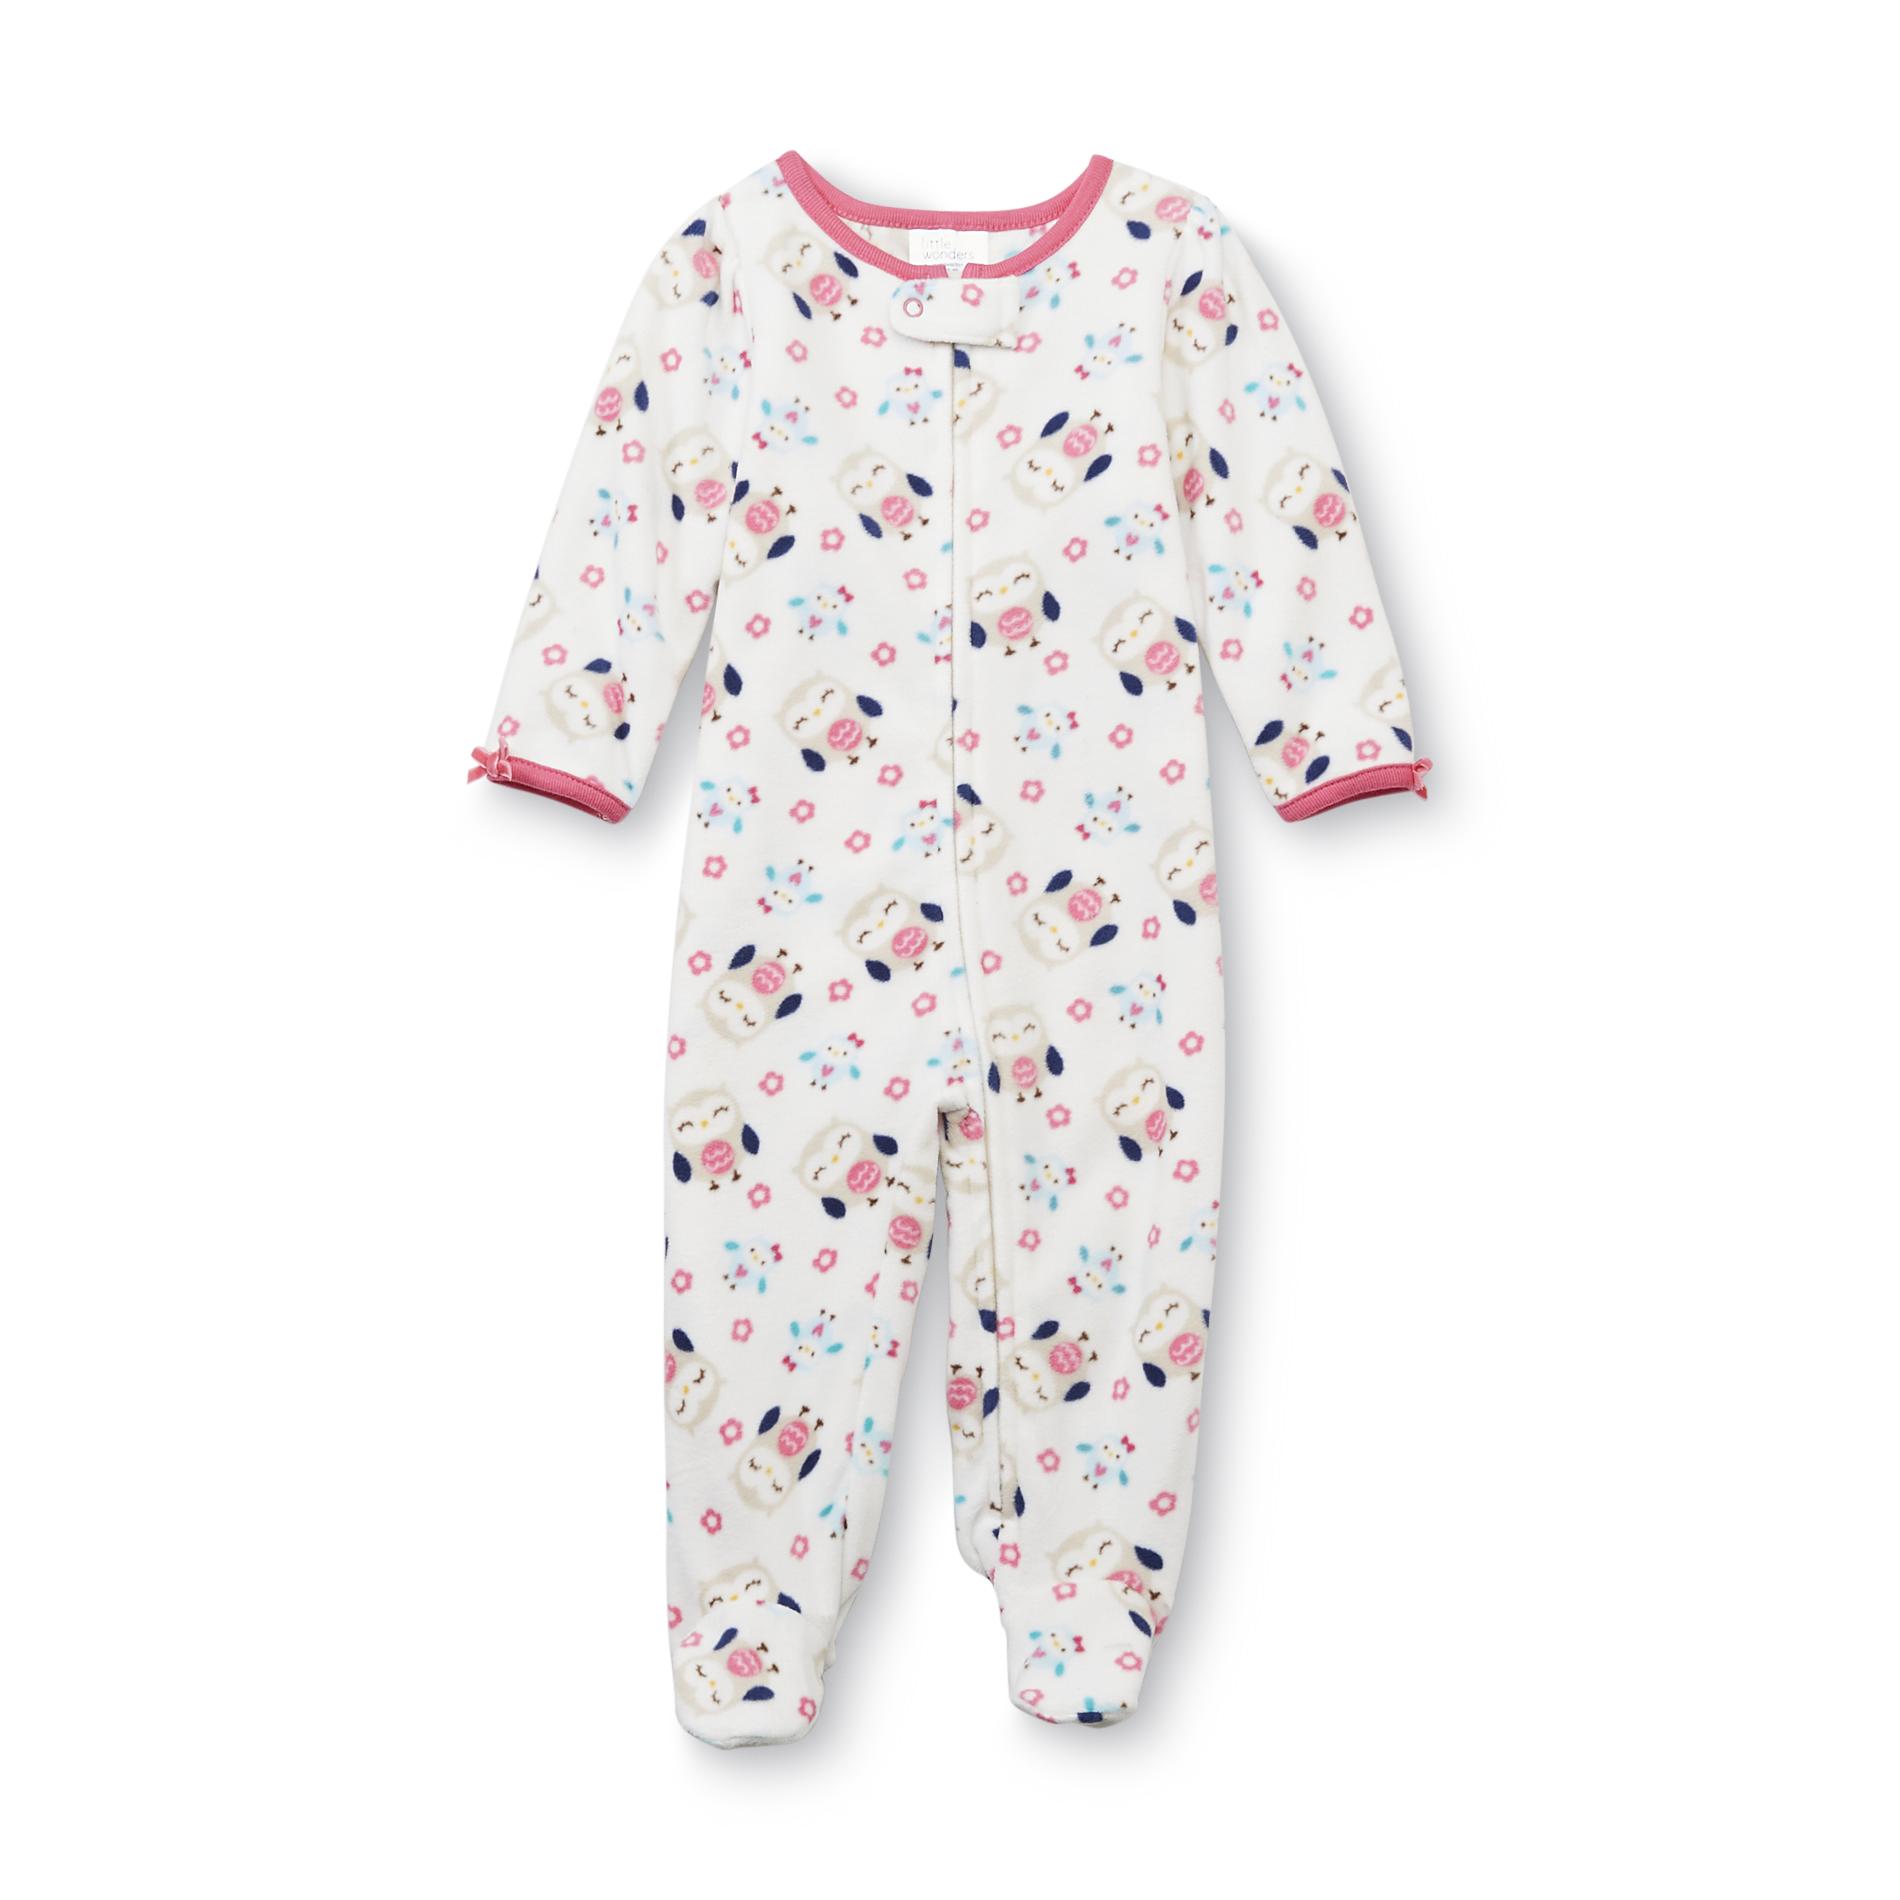 Little Wonders Newborn Girl's Fleece Sleeper Pajamas - Owls